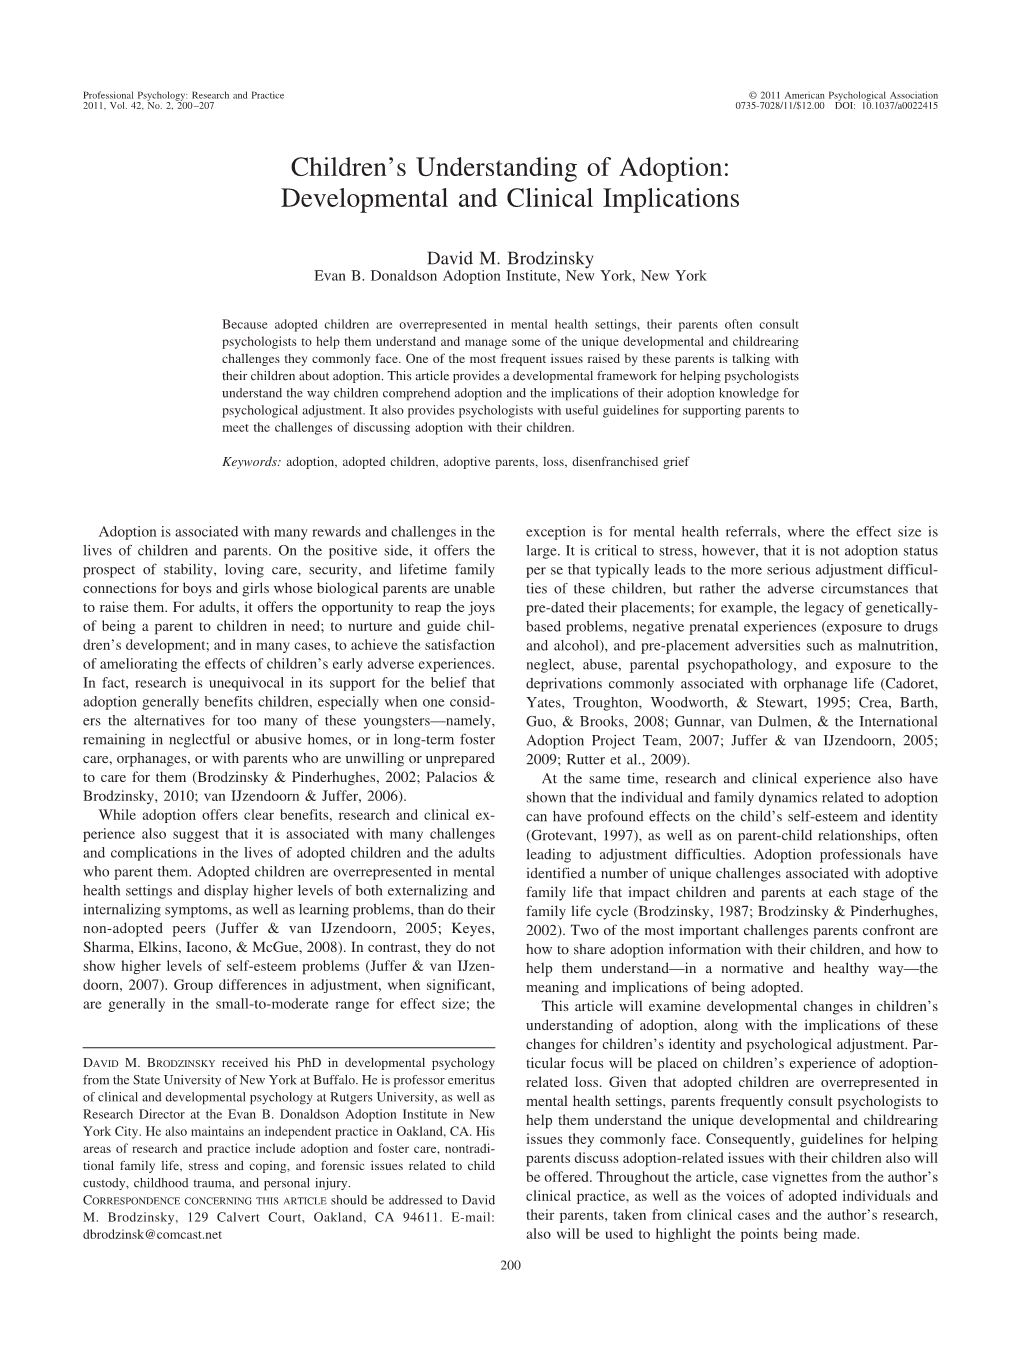 Children's Understanding of Adoption: Developmental and Clinical Implications